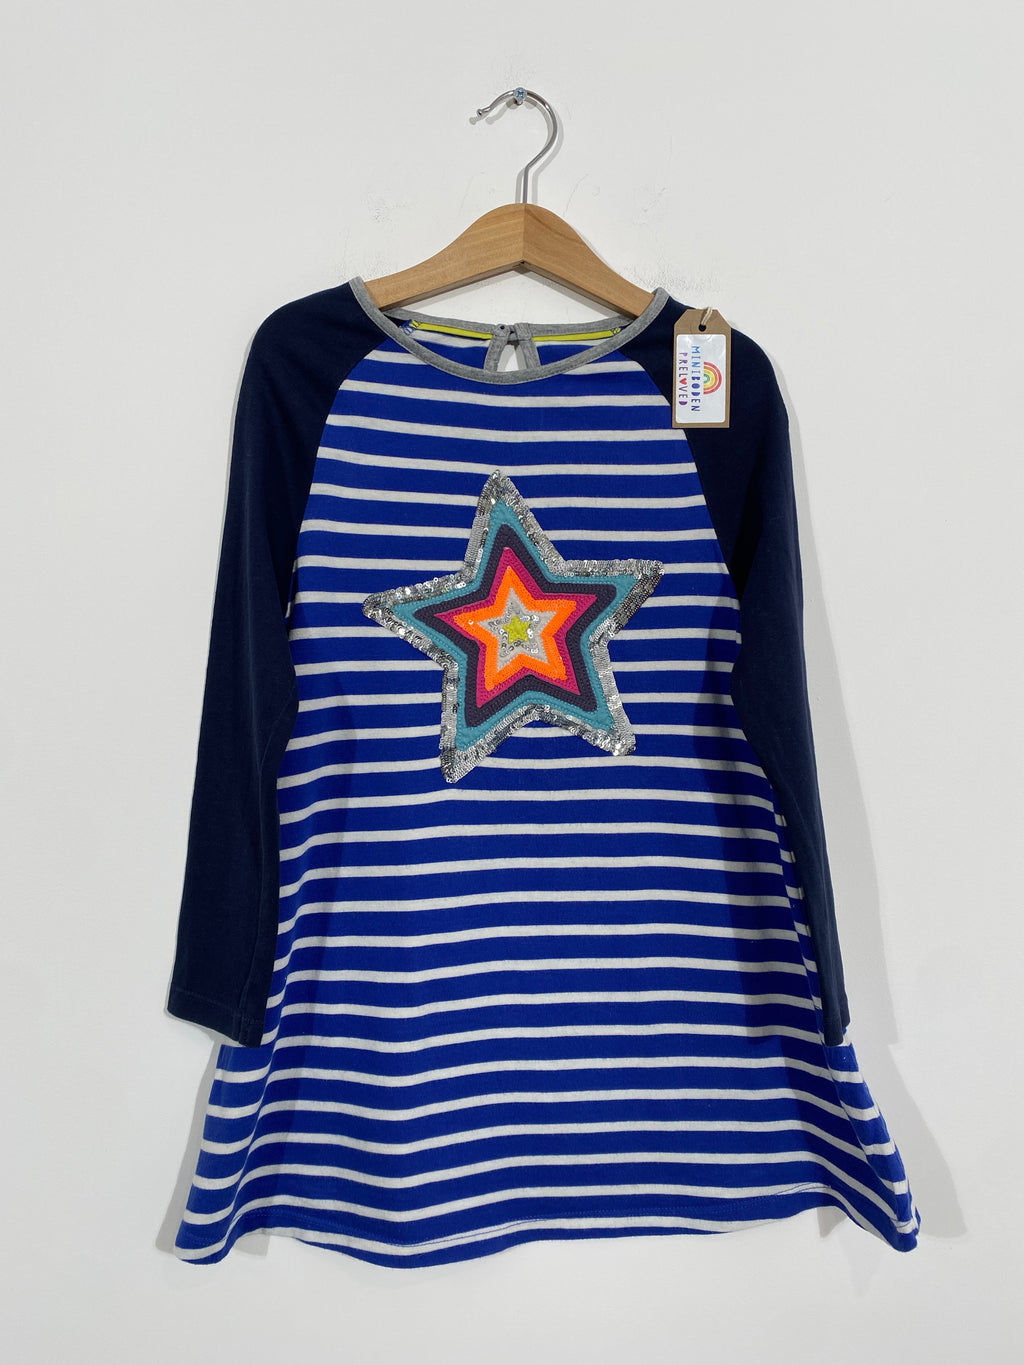 Blue Stripy Applique Star Jersey Dress (4-5 Years)